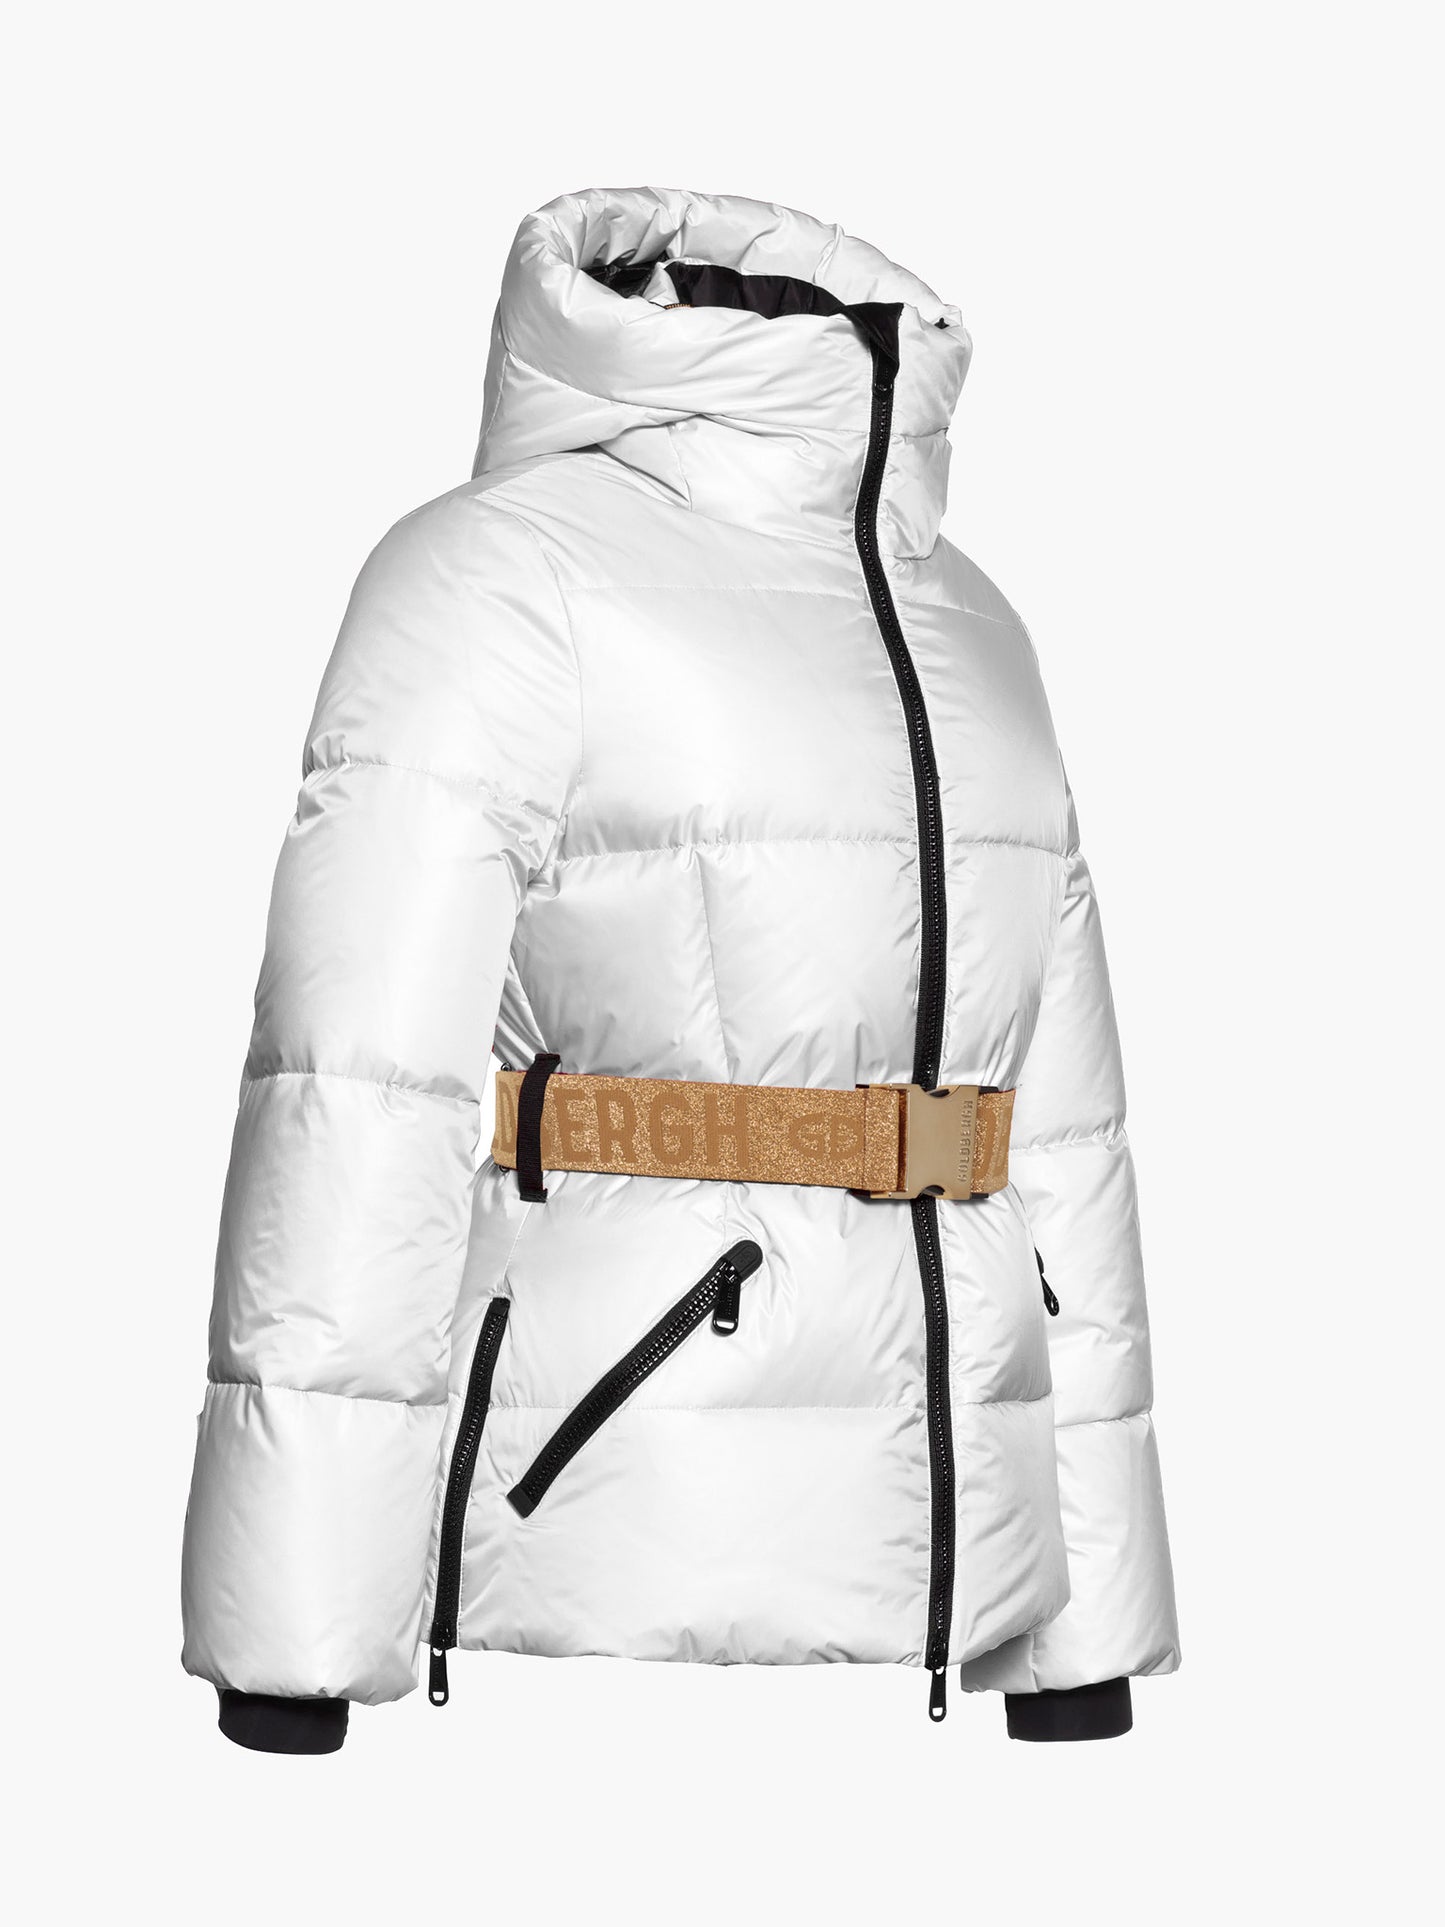 SNOWMASS ski jacket